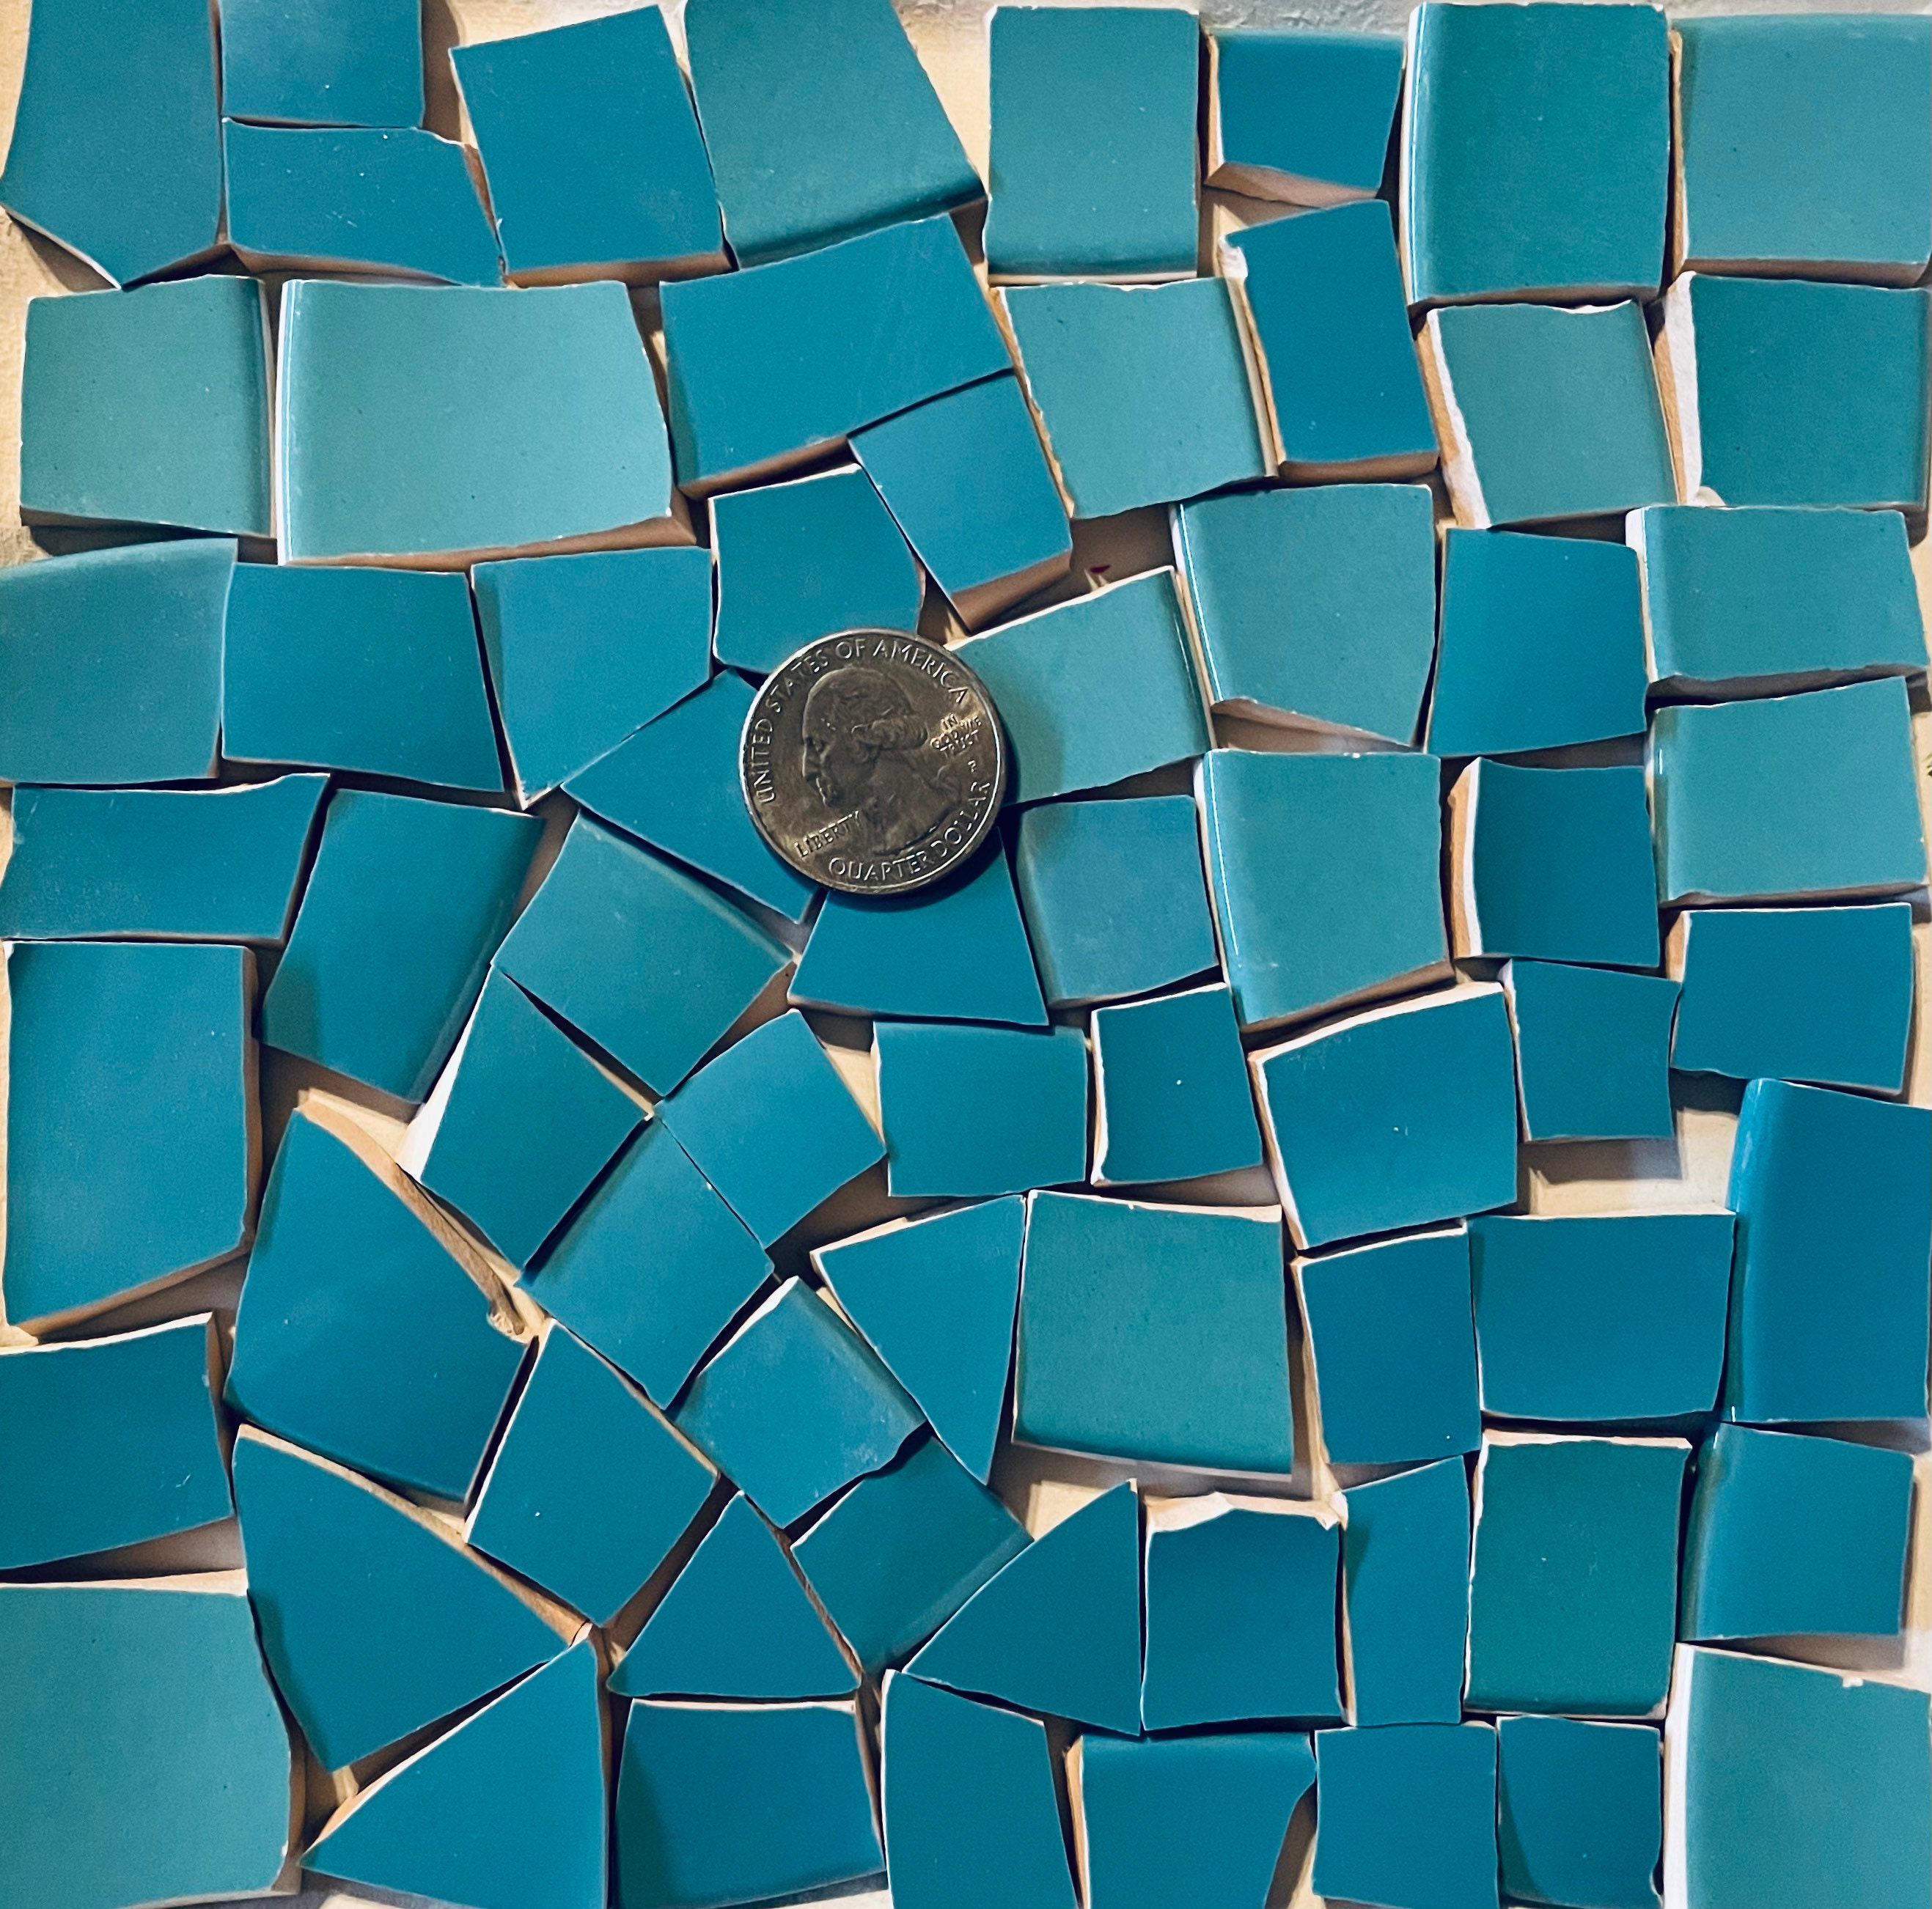 Lanyani Broken Ceramic Porcelain Tiles for Mosaic Crafts Glazed Irregular  Blue and White China Plate Mosaic Tiles, 11x11 Inch 